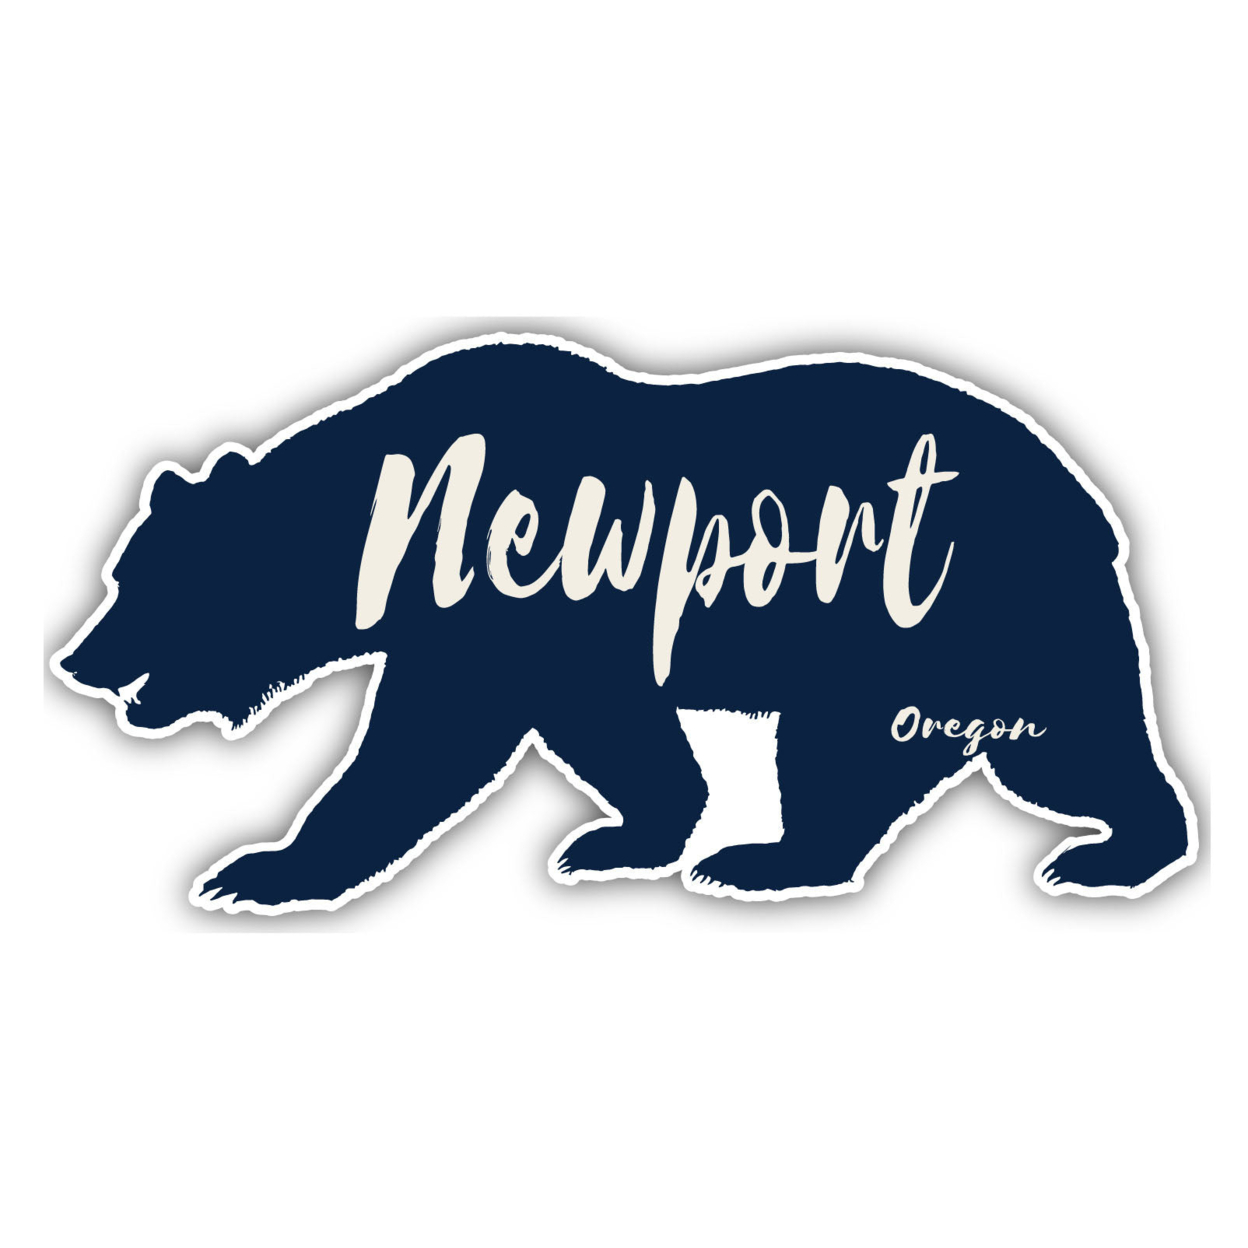 Newport Oregon Souvenir Decorative Stickers (Choose Theme And Size) - Single Unit, 2-Inch, Tent